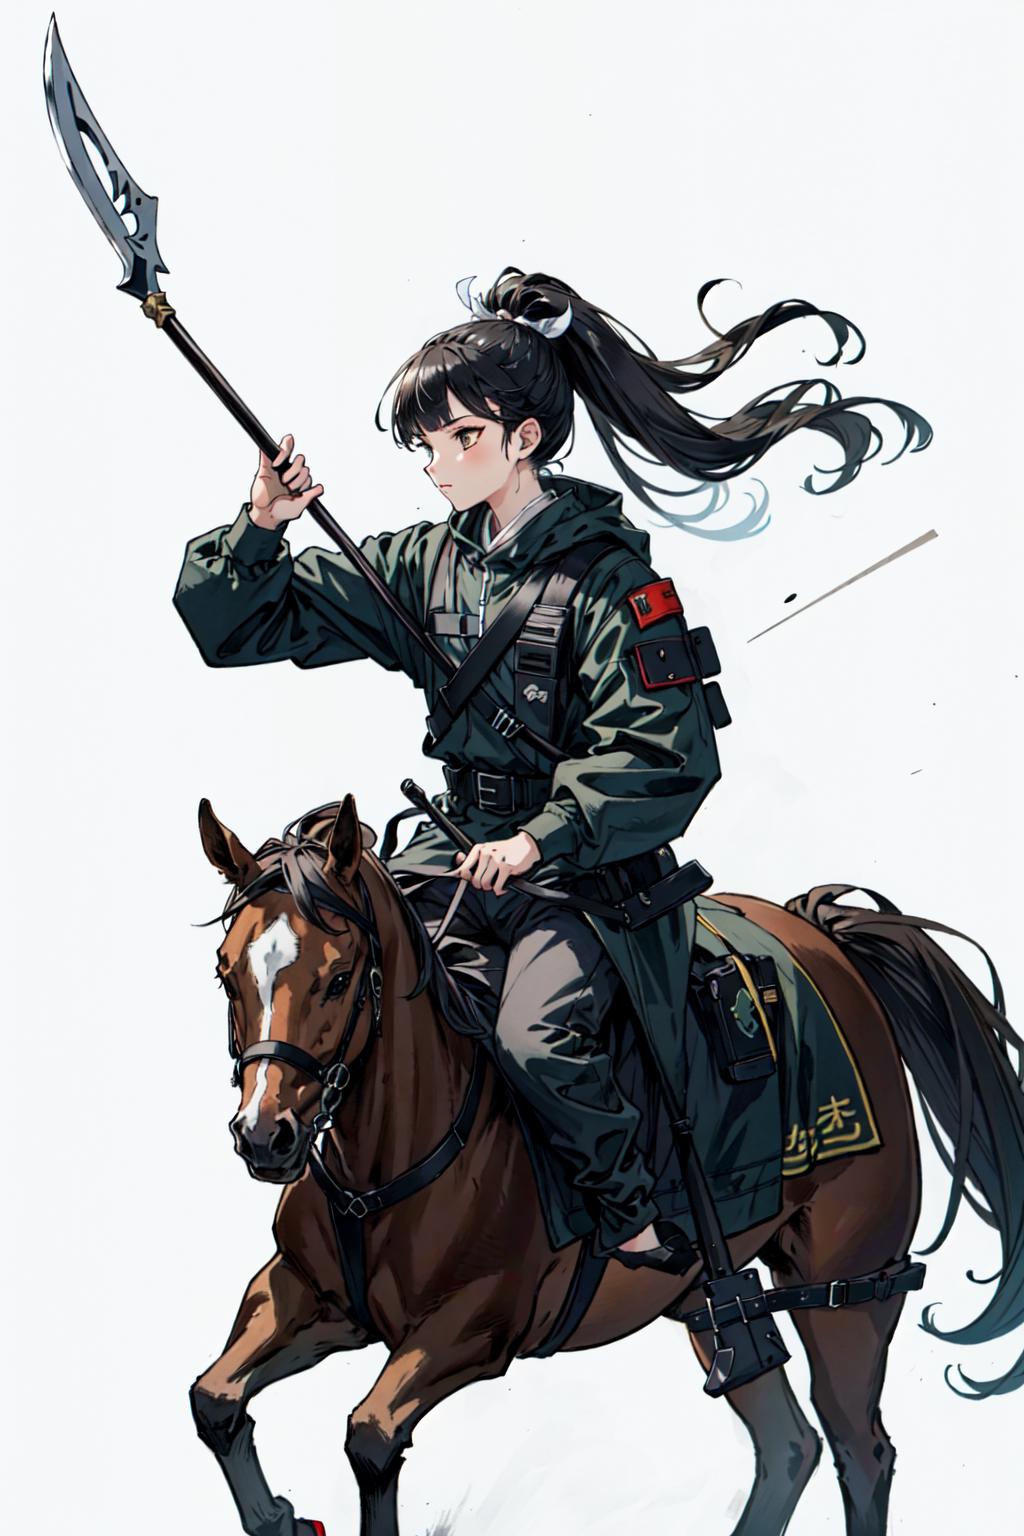 46+] Anime Female Warrior Wallpaper - WallpaperSafari